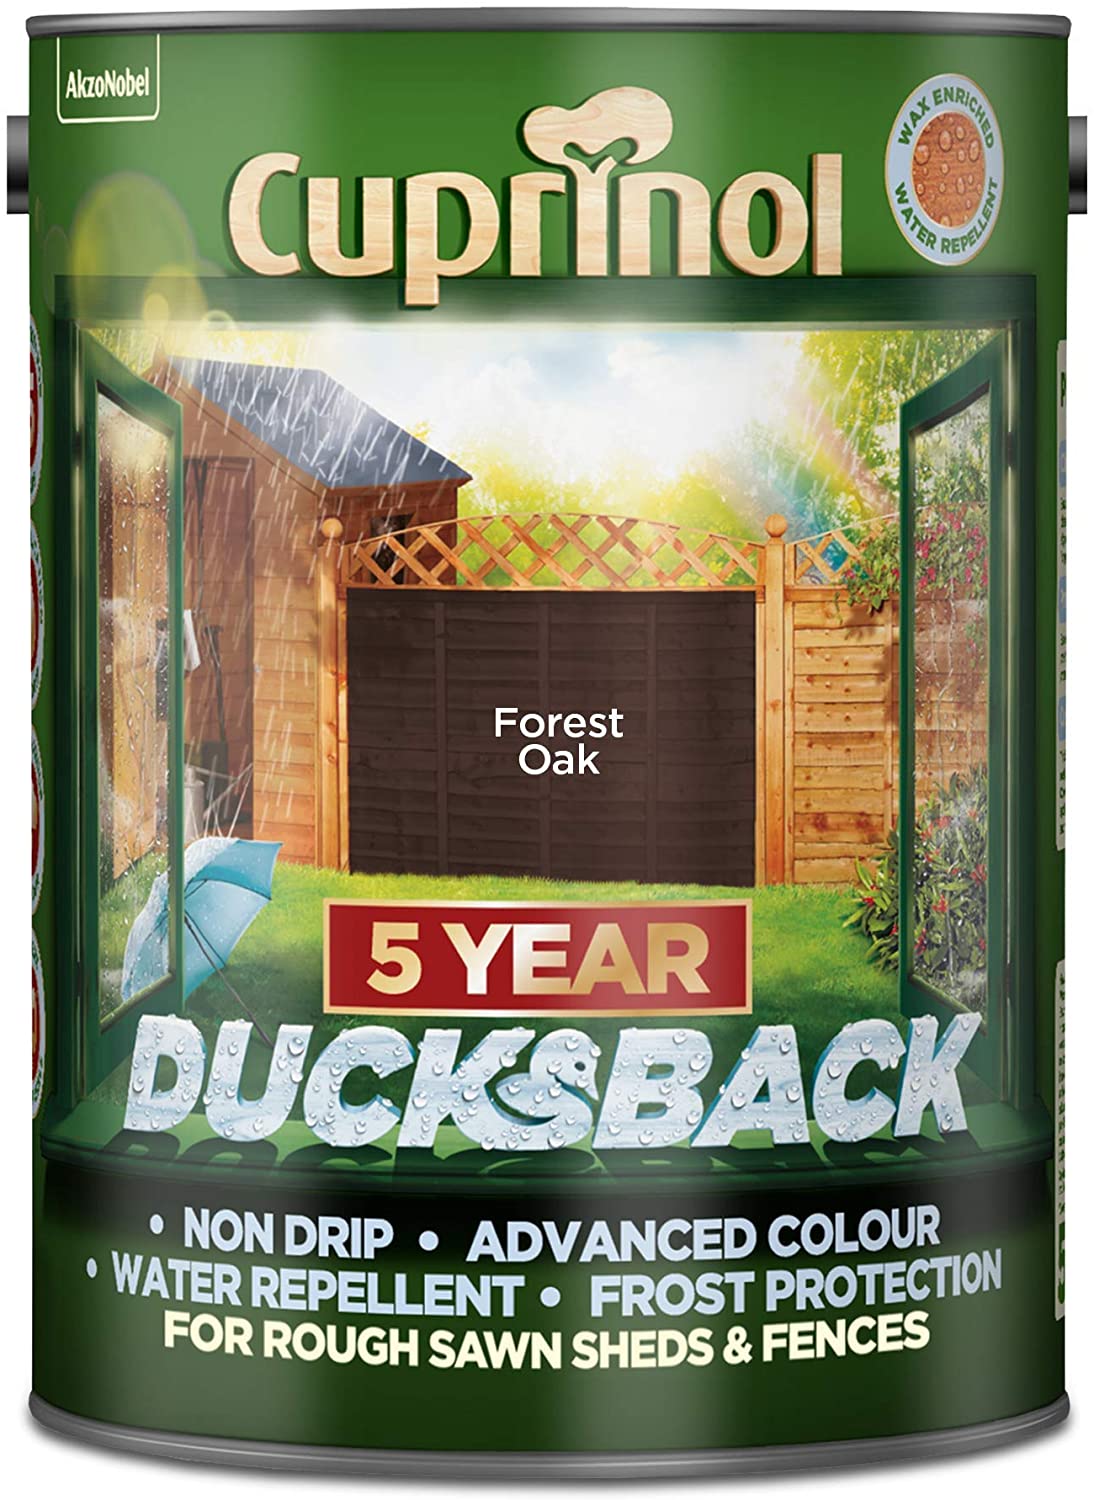 Cuprinol Ducksback 5 Year Waterproof For Sheds And Fences - Forest Oak Litre Garden & Diy Home